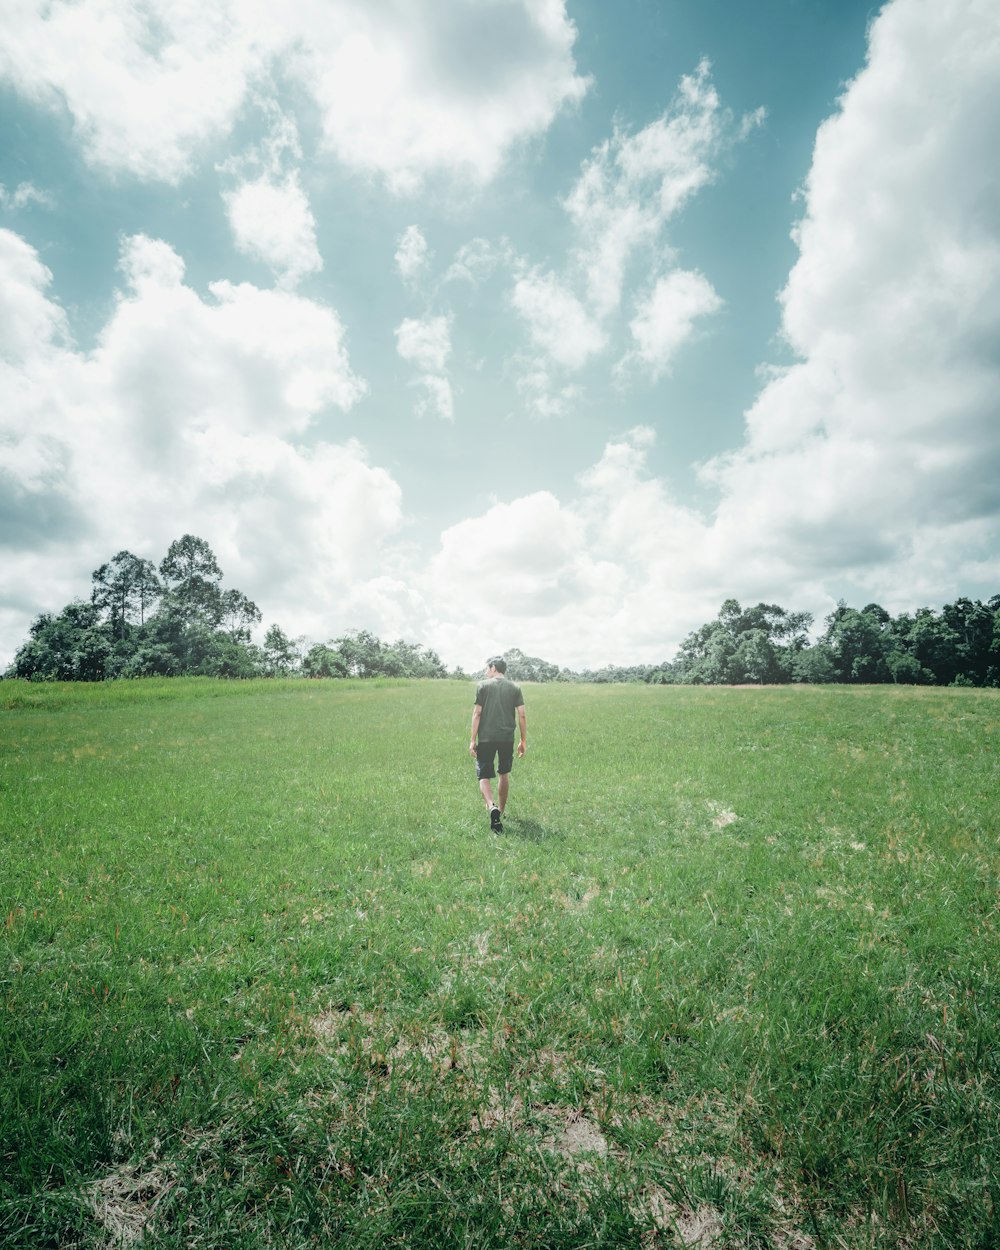 a man walking across a lush green field